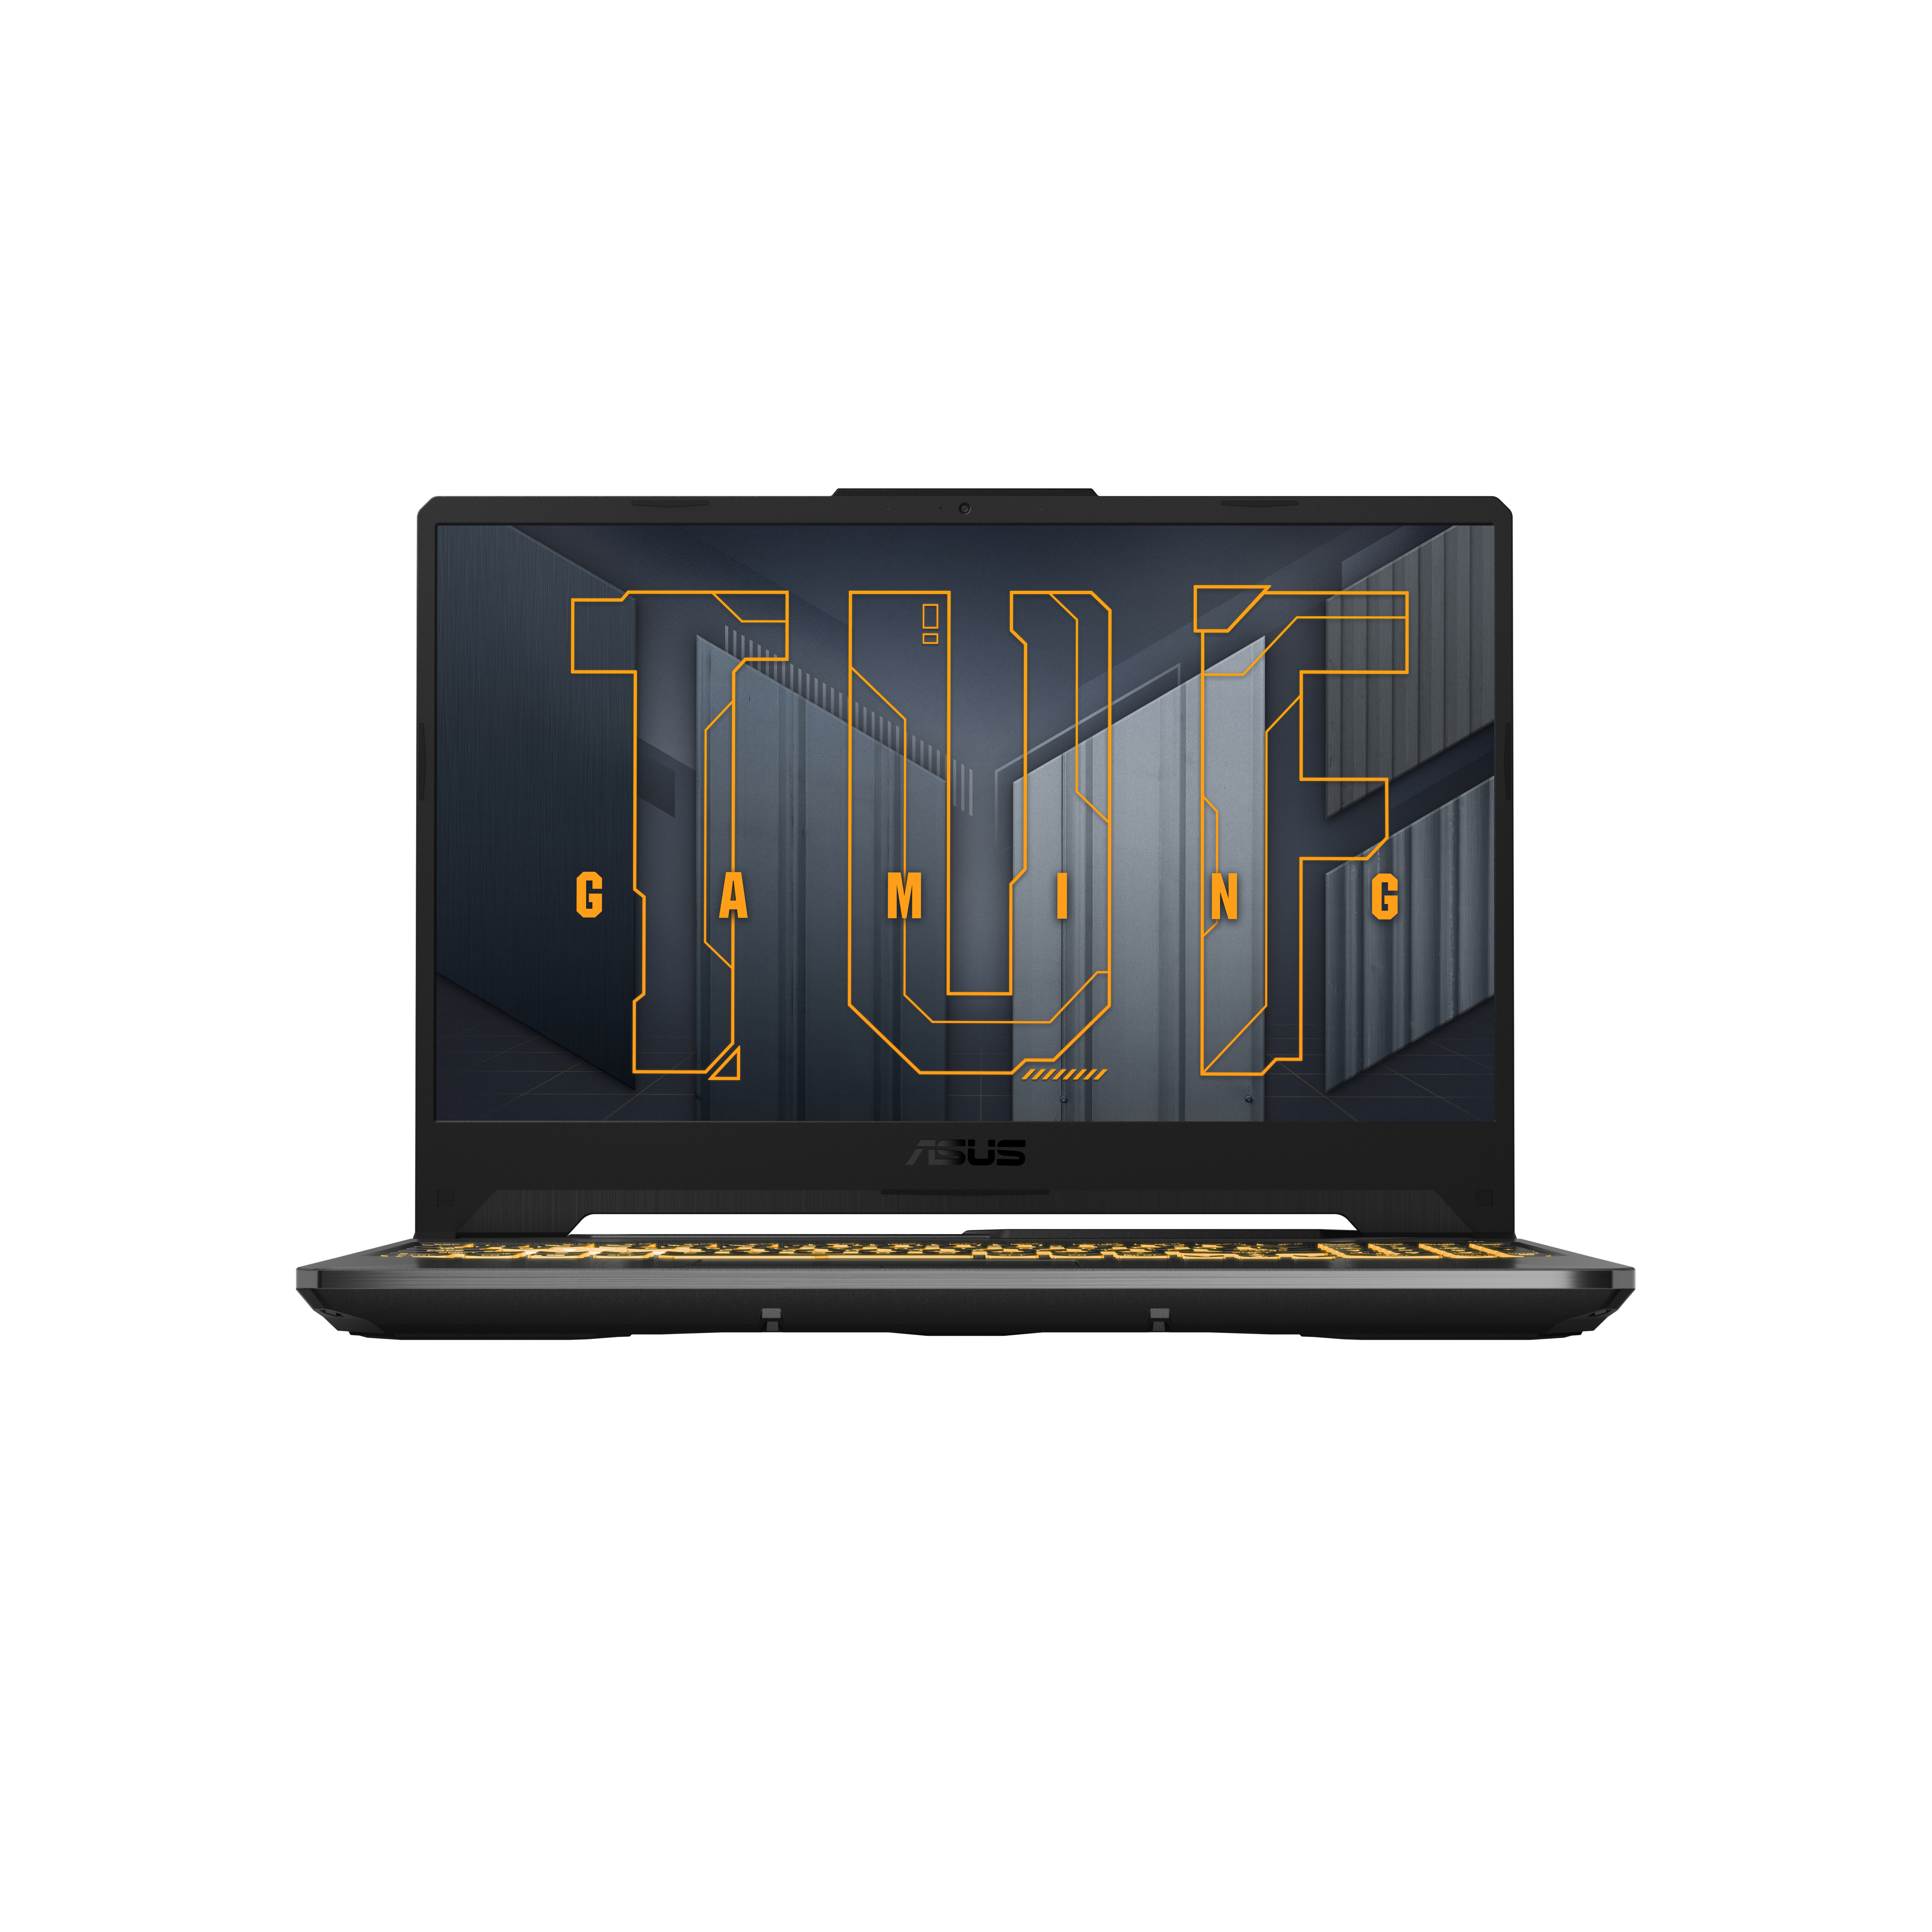 Laptop Asus Tuf 15.6" Fhd Ci5-11400H 8Gb 512Ssd W10Ho Rtx 3050 4Gb